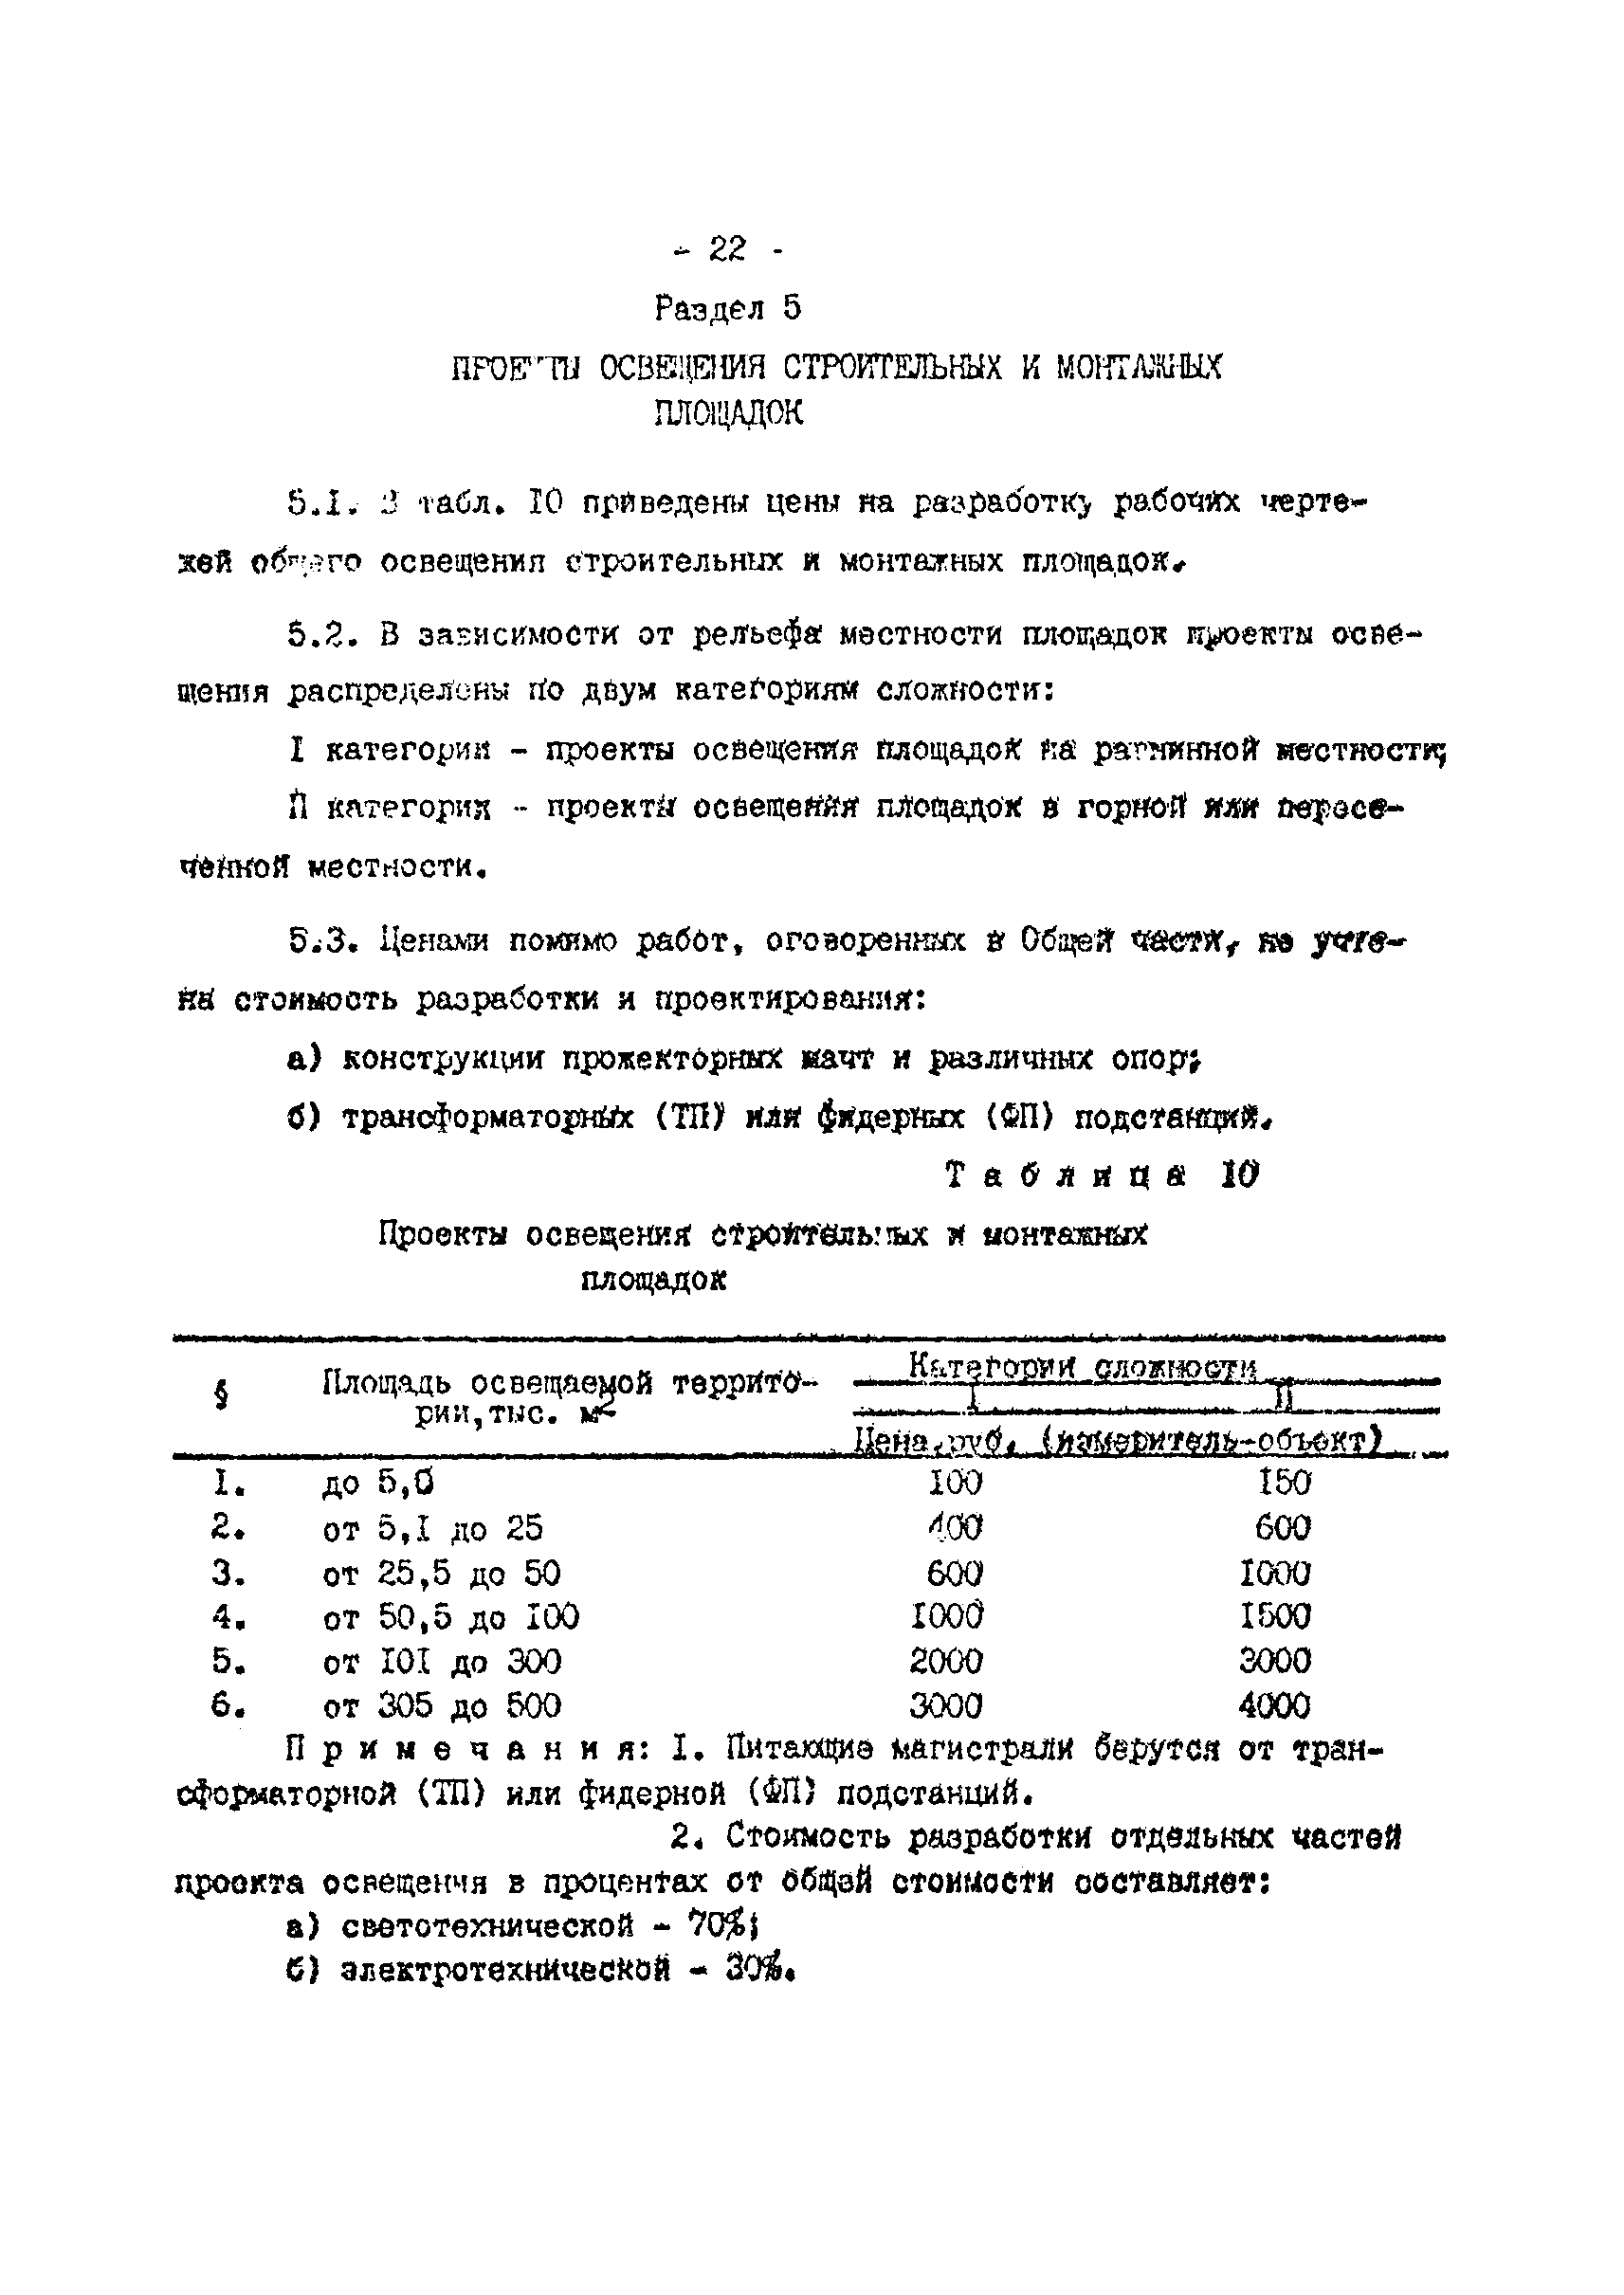 РТМ 12.58.006-82